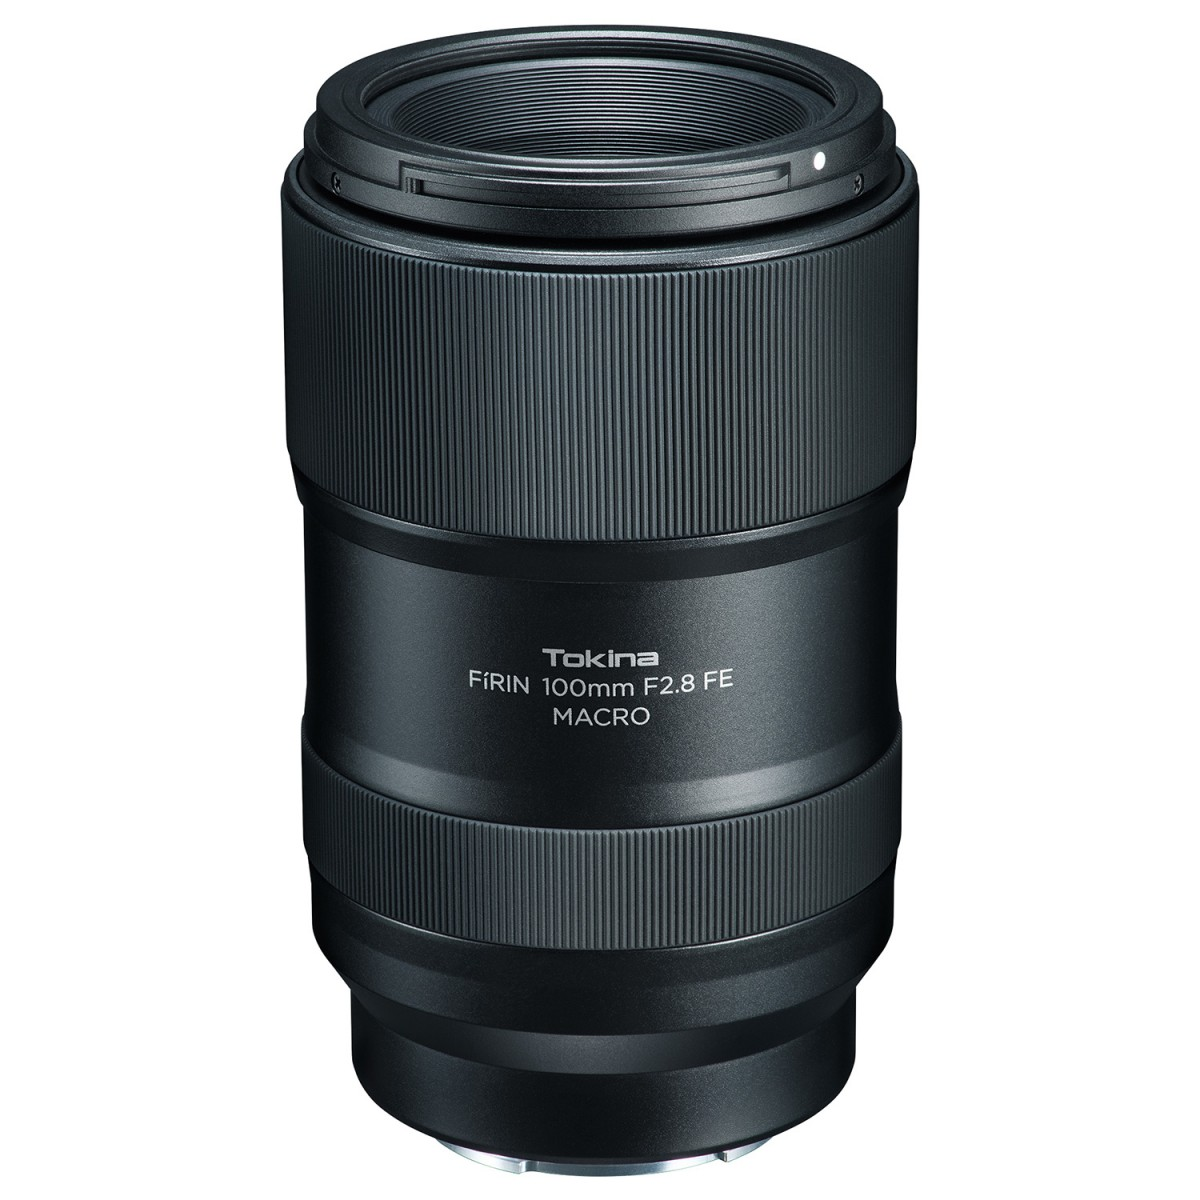 Tokina FiRIN 100mm f/2.8 FE Macro Lens  for Sony E